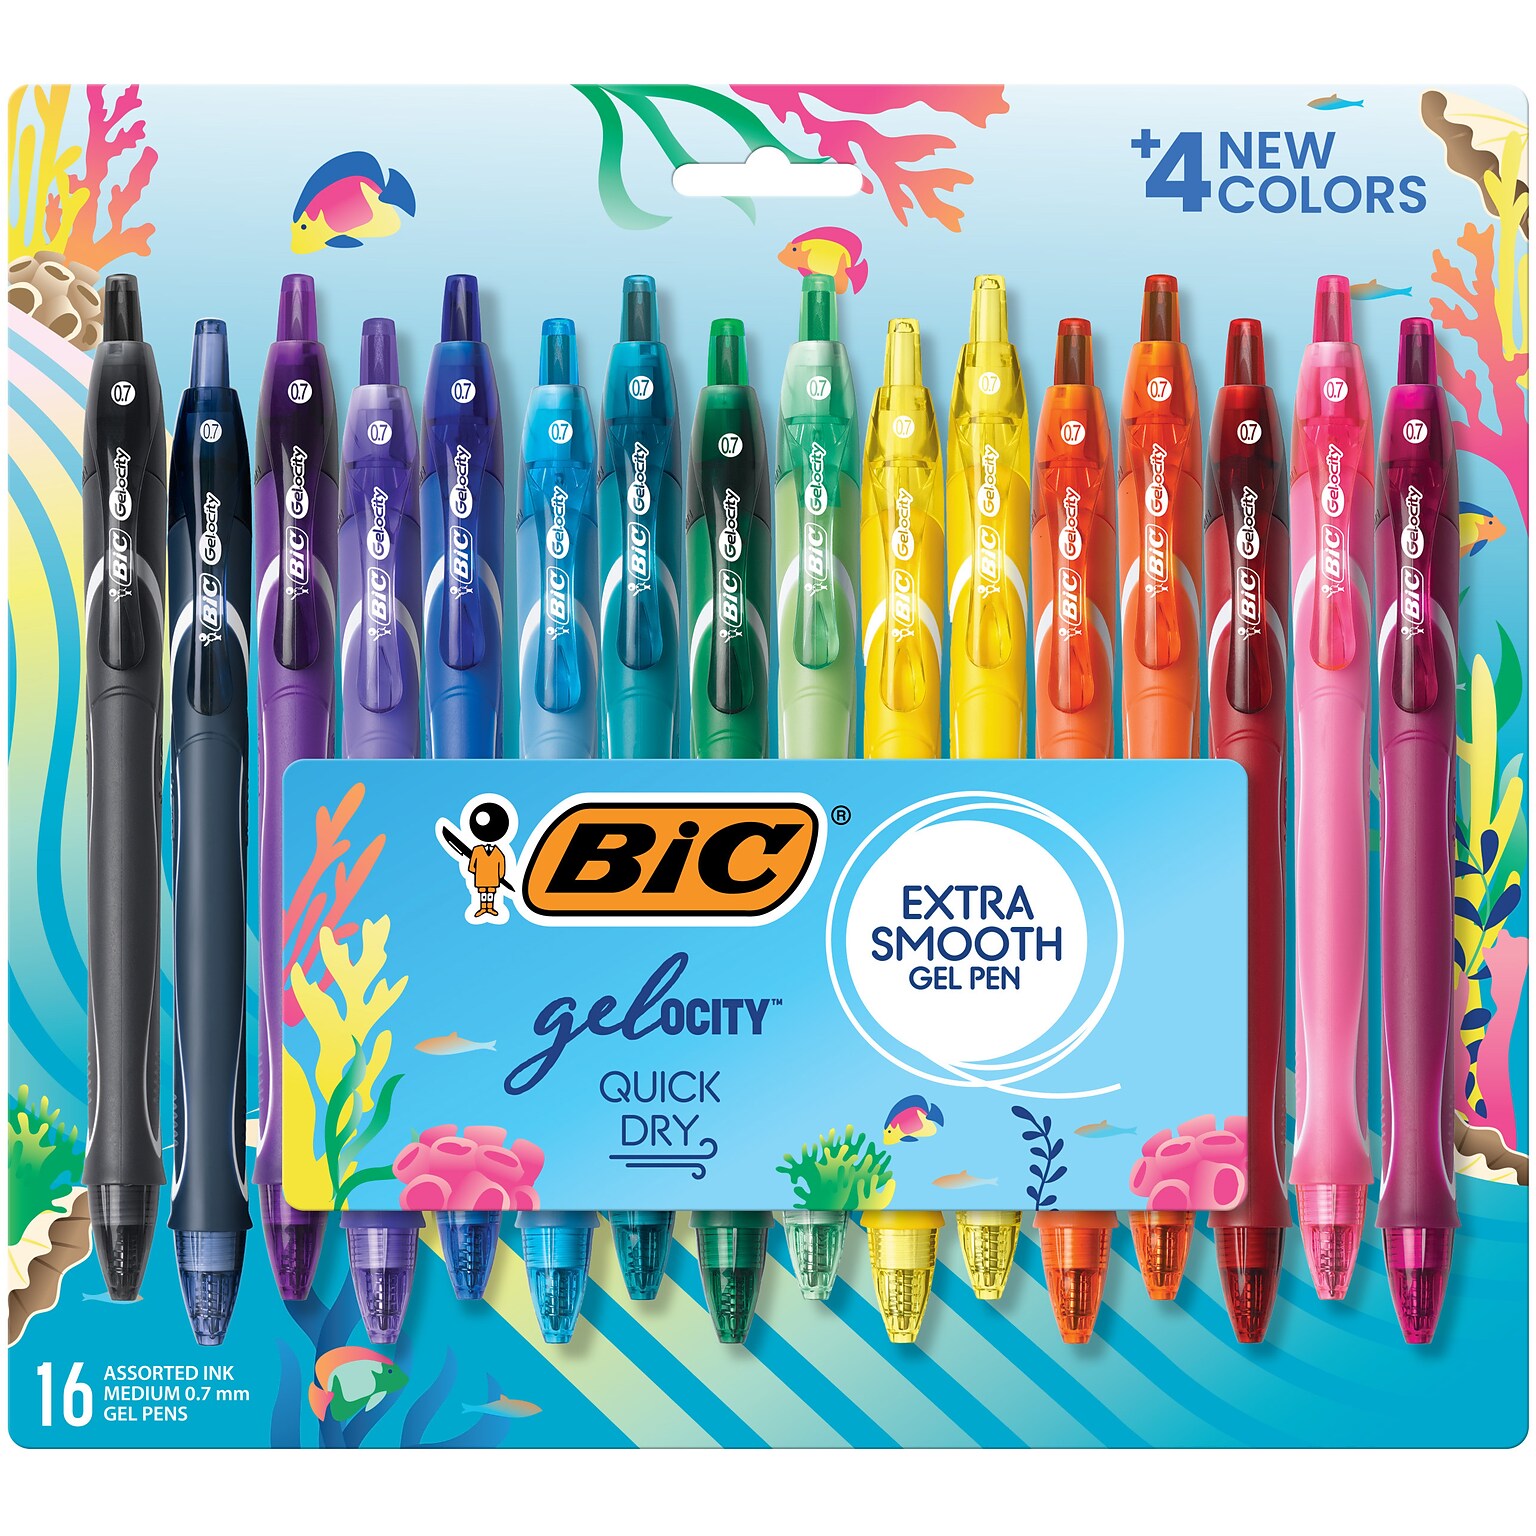 BIC Gel-ocity Quick Dry Retractable Gel Pens, Medium Point, 0.7mm, Assorted Inks, 16/Pack (RGLCGA16-AST)